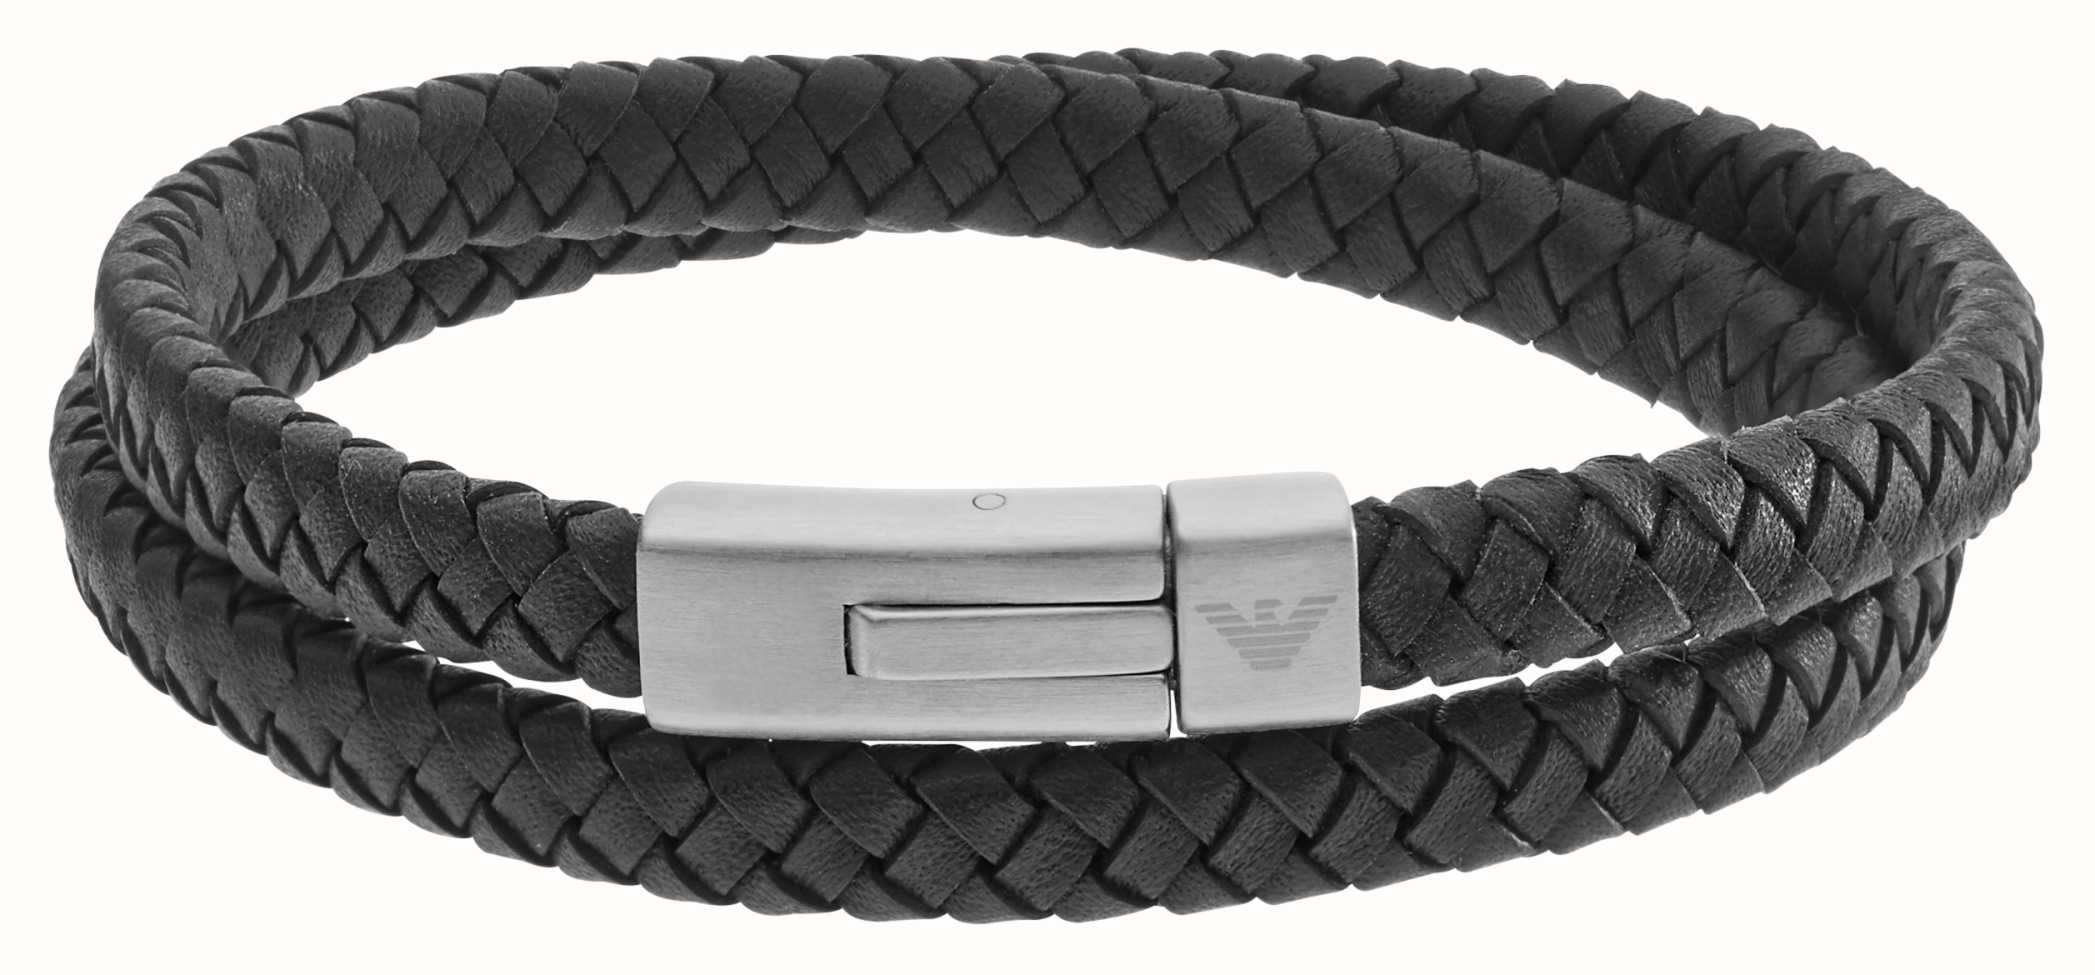 Emporio Armani EGS2435040 Men's Stainless Steel Chain Bracelet, Silver